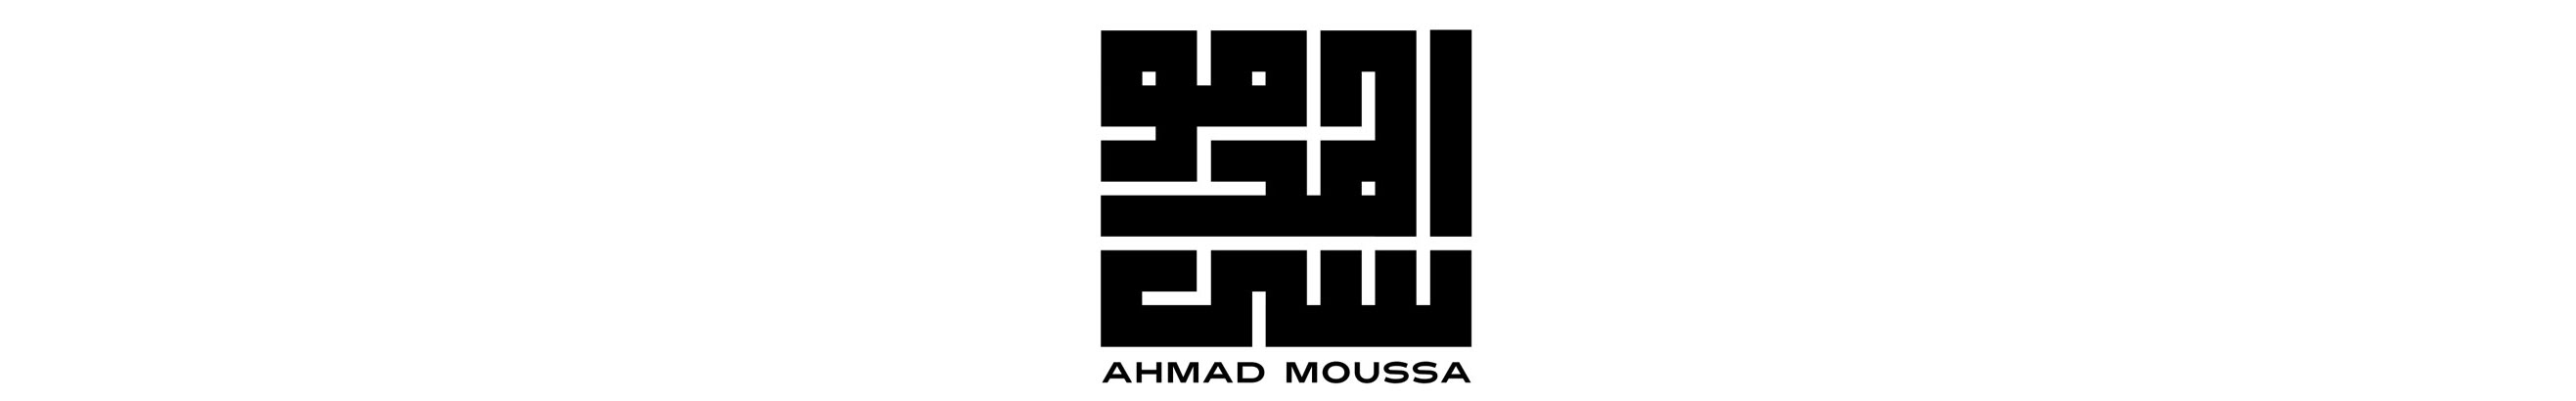 Баннер профиля Ahmad Moussa